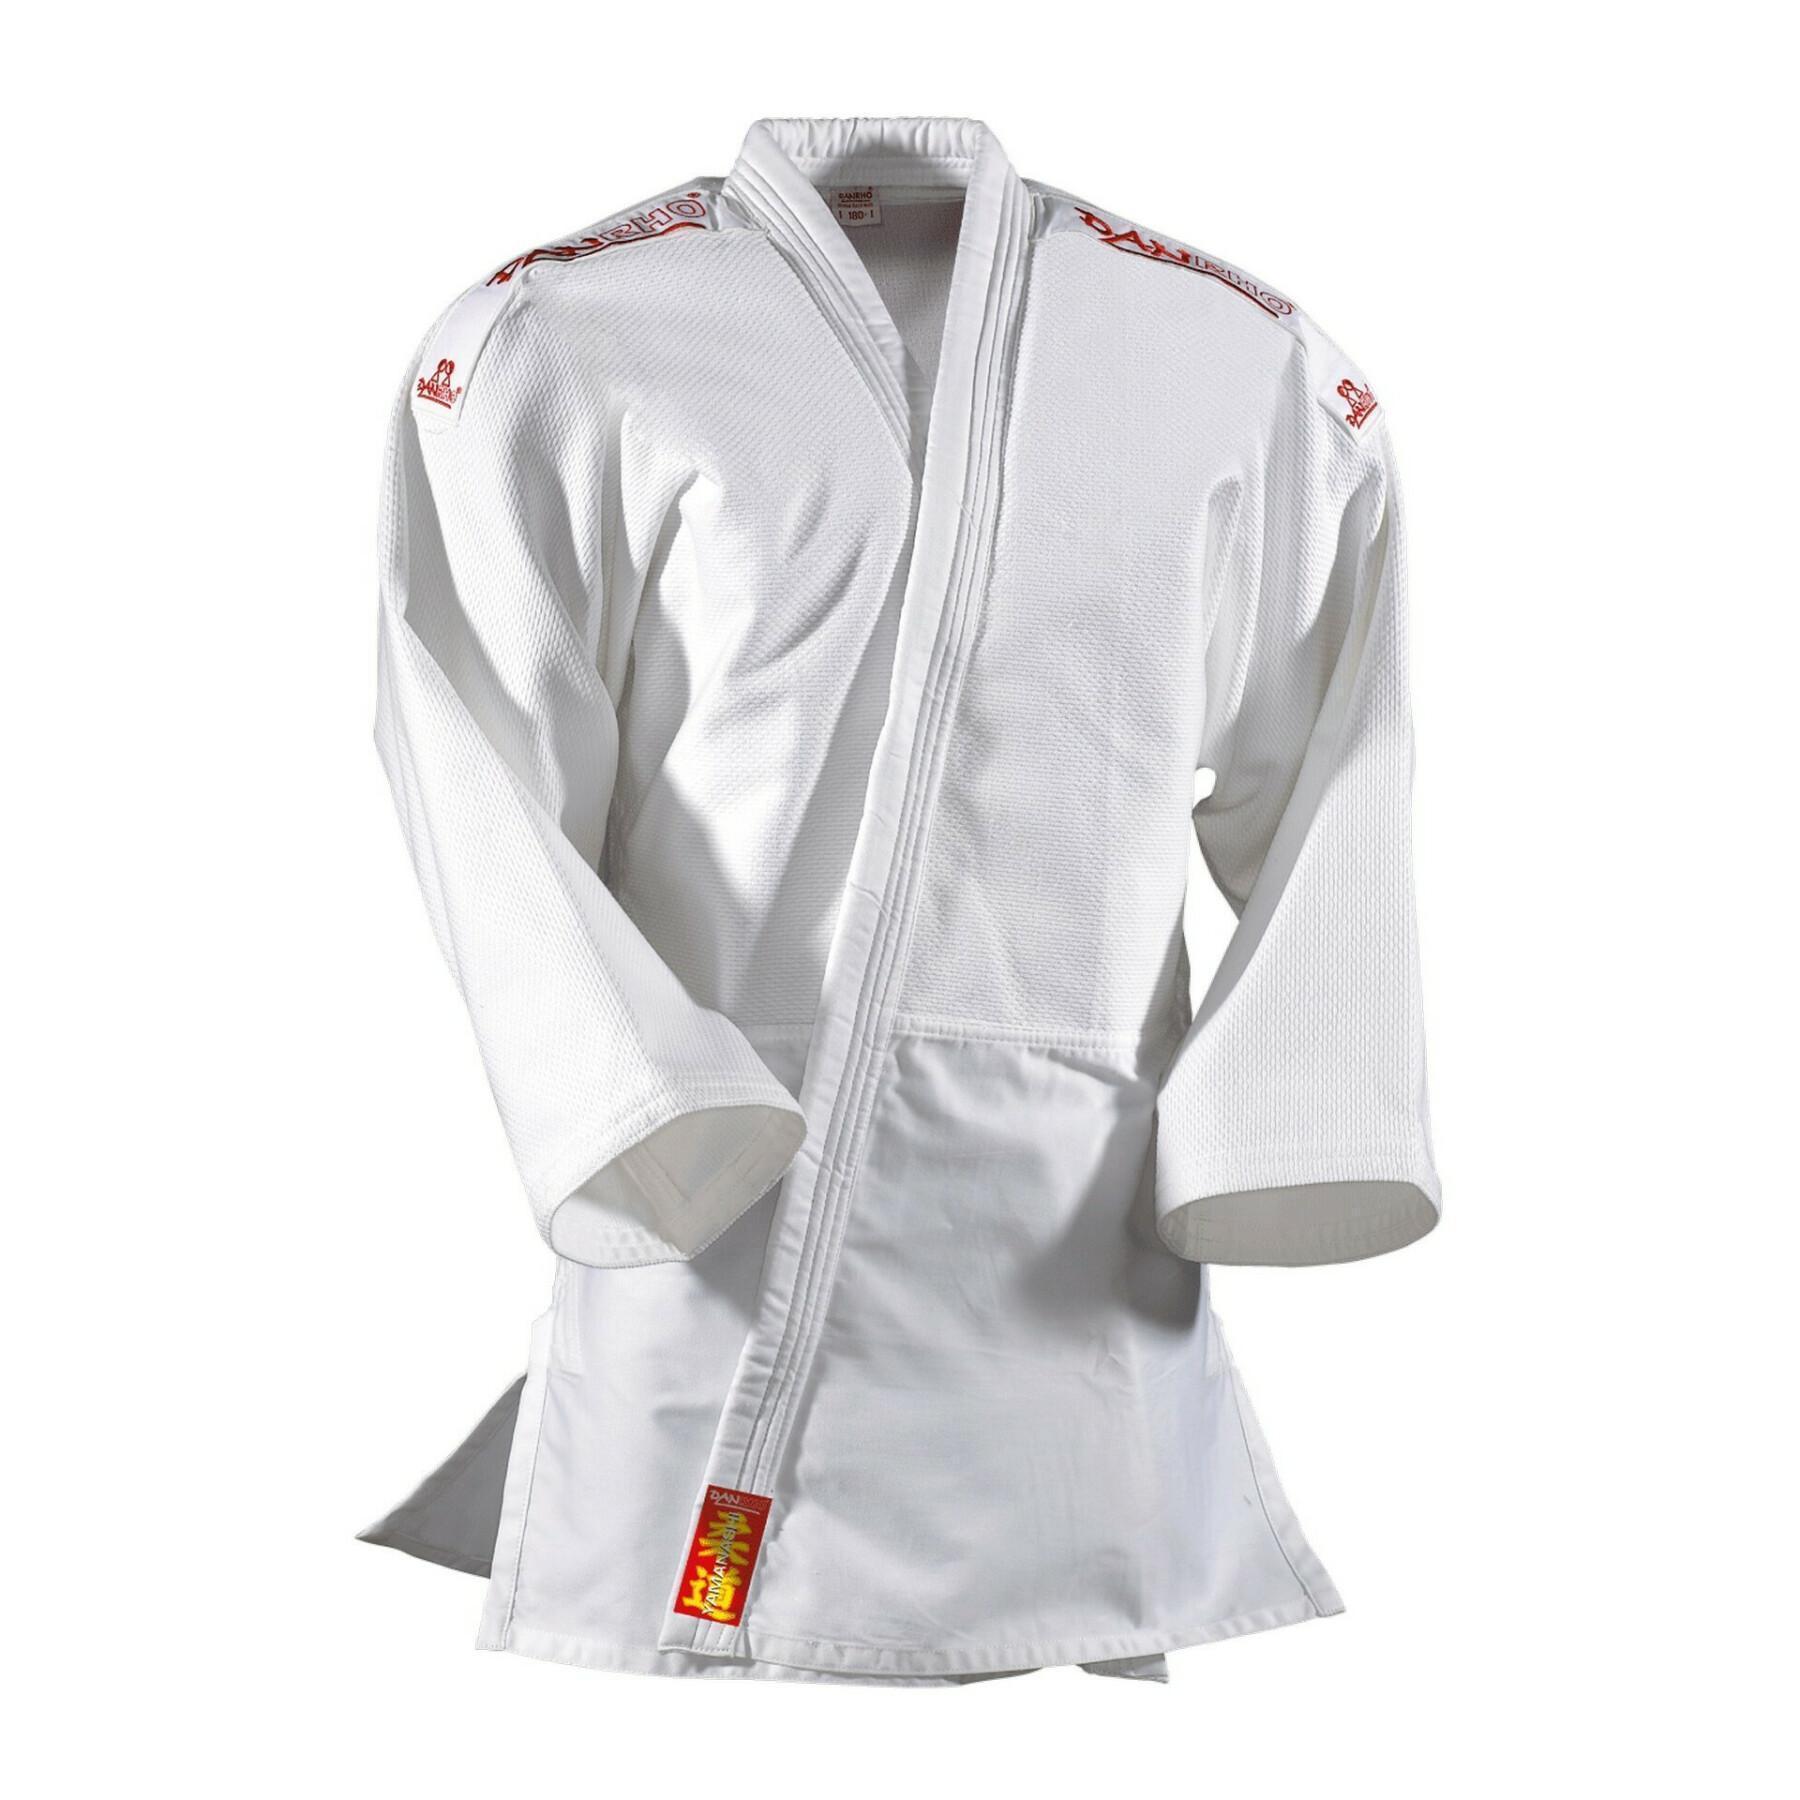 Kimono judo with stripes on the shoulders Danrho Yamanashi